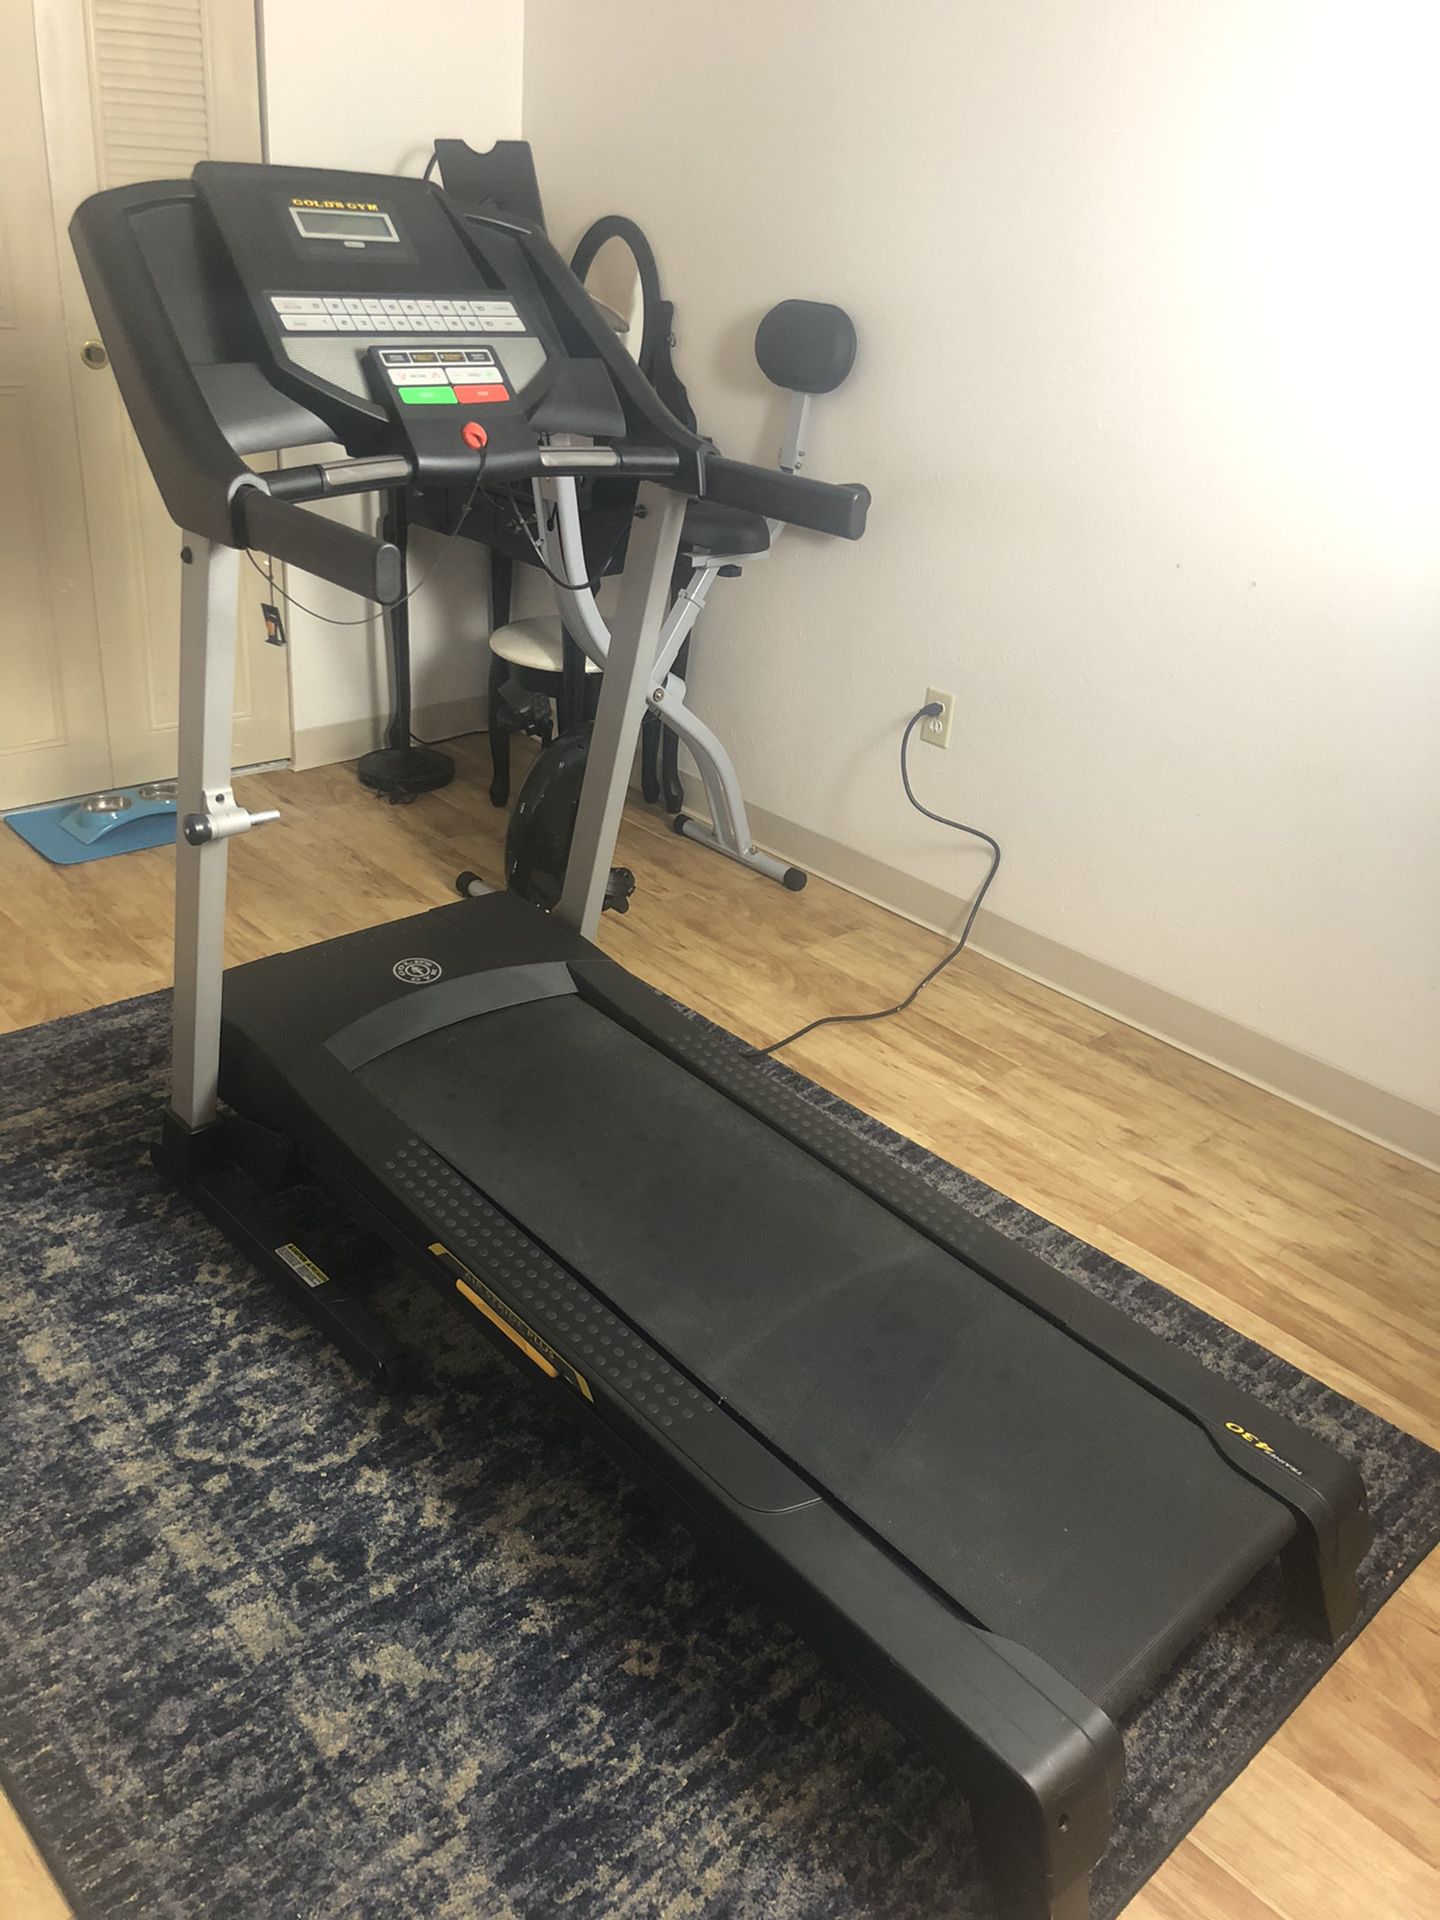 Golds Gym Trainer 430 treadmill